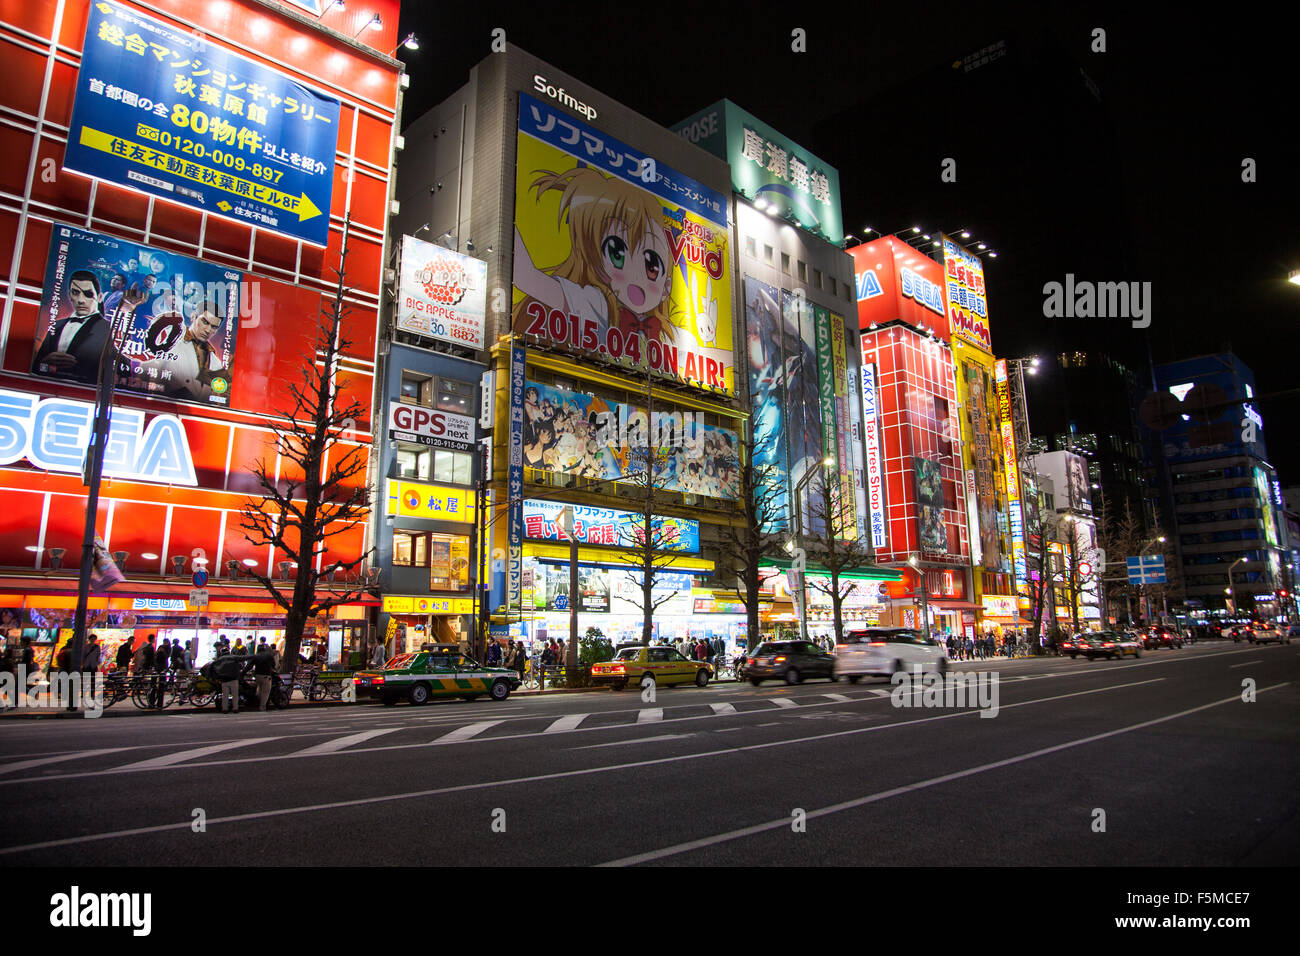 Akihabara at night - the electronic district of Tokyo, Japan Stock Photo